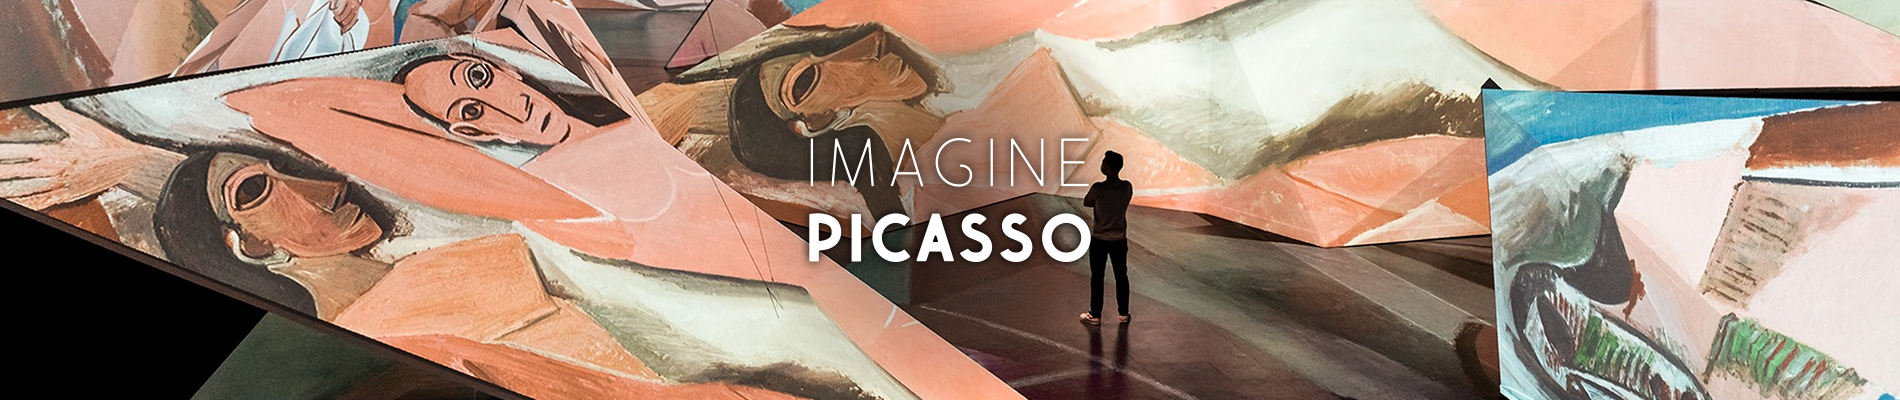 Imagine Picasso